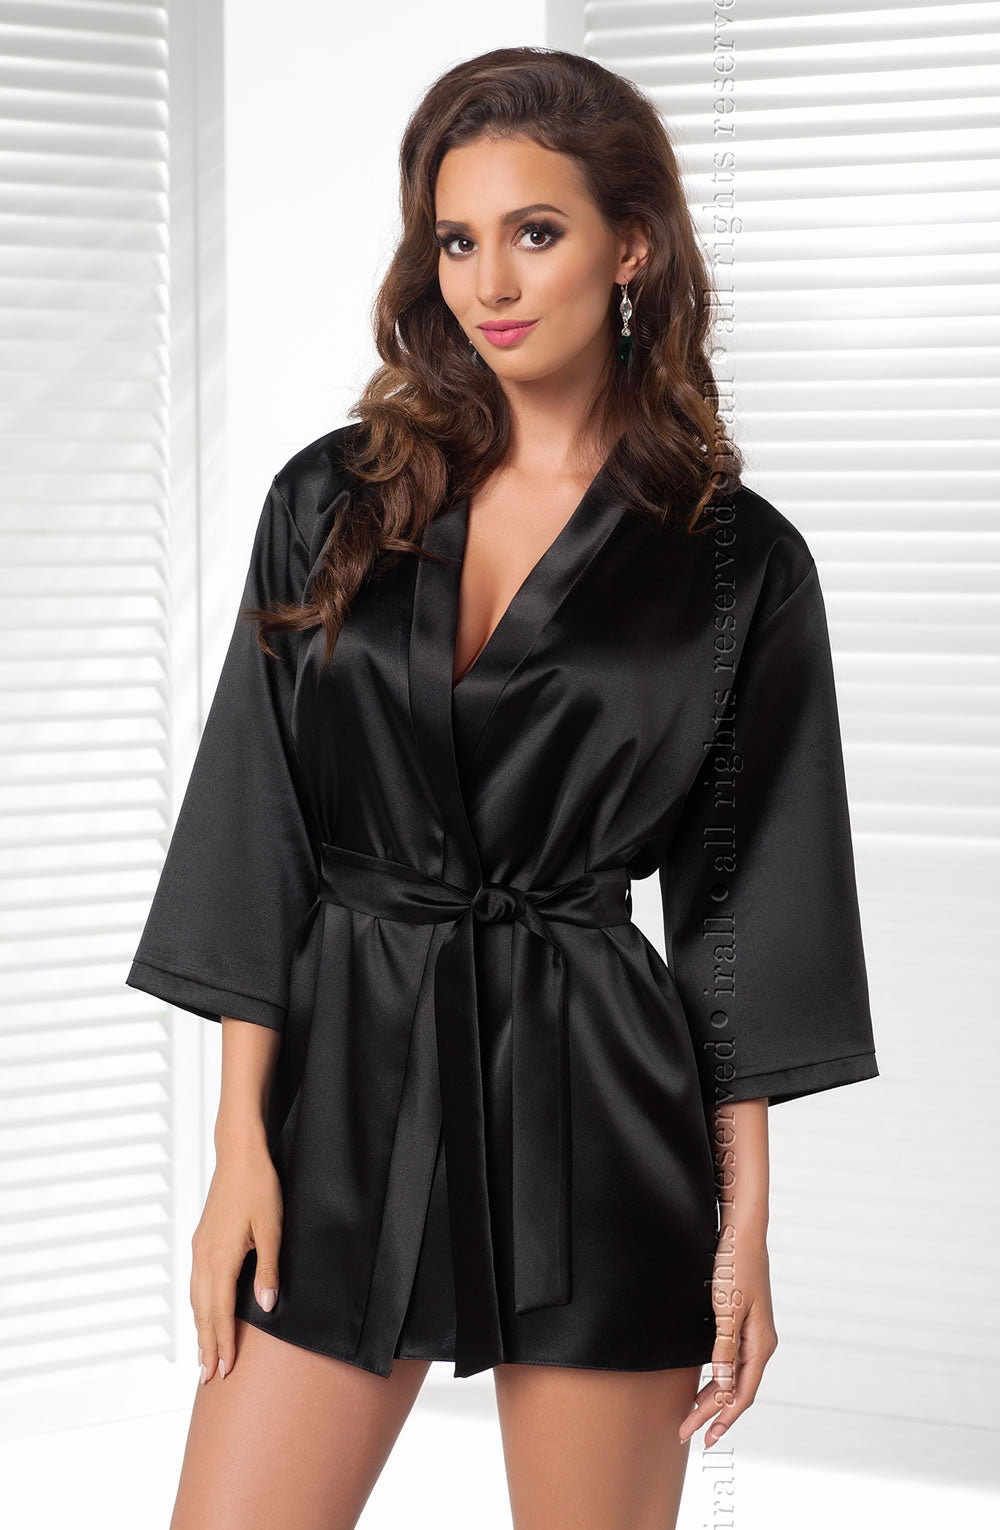 Irall Aria Dressing Gown Black - PureDiva